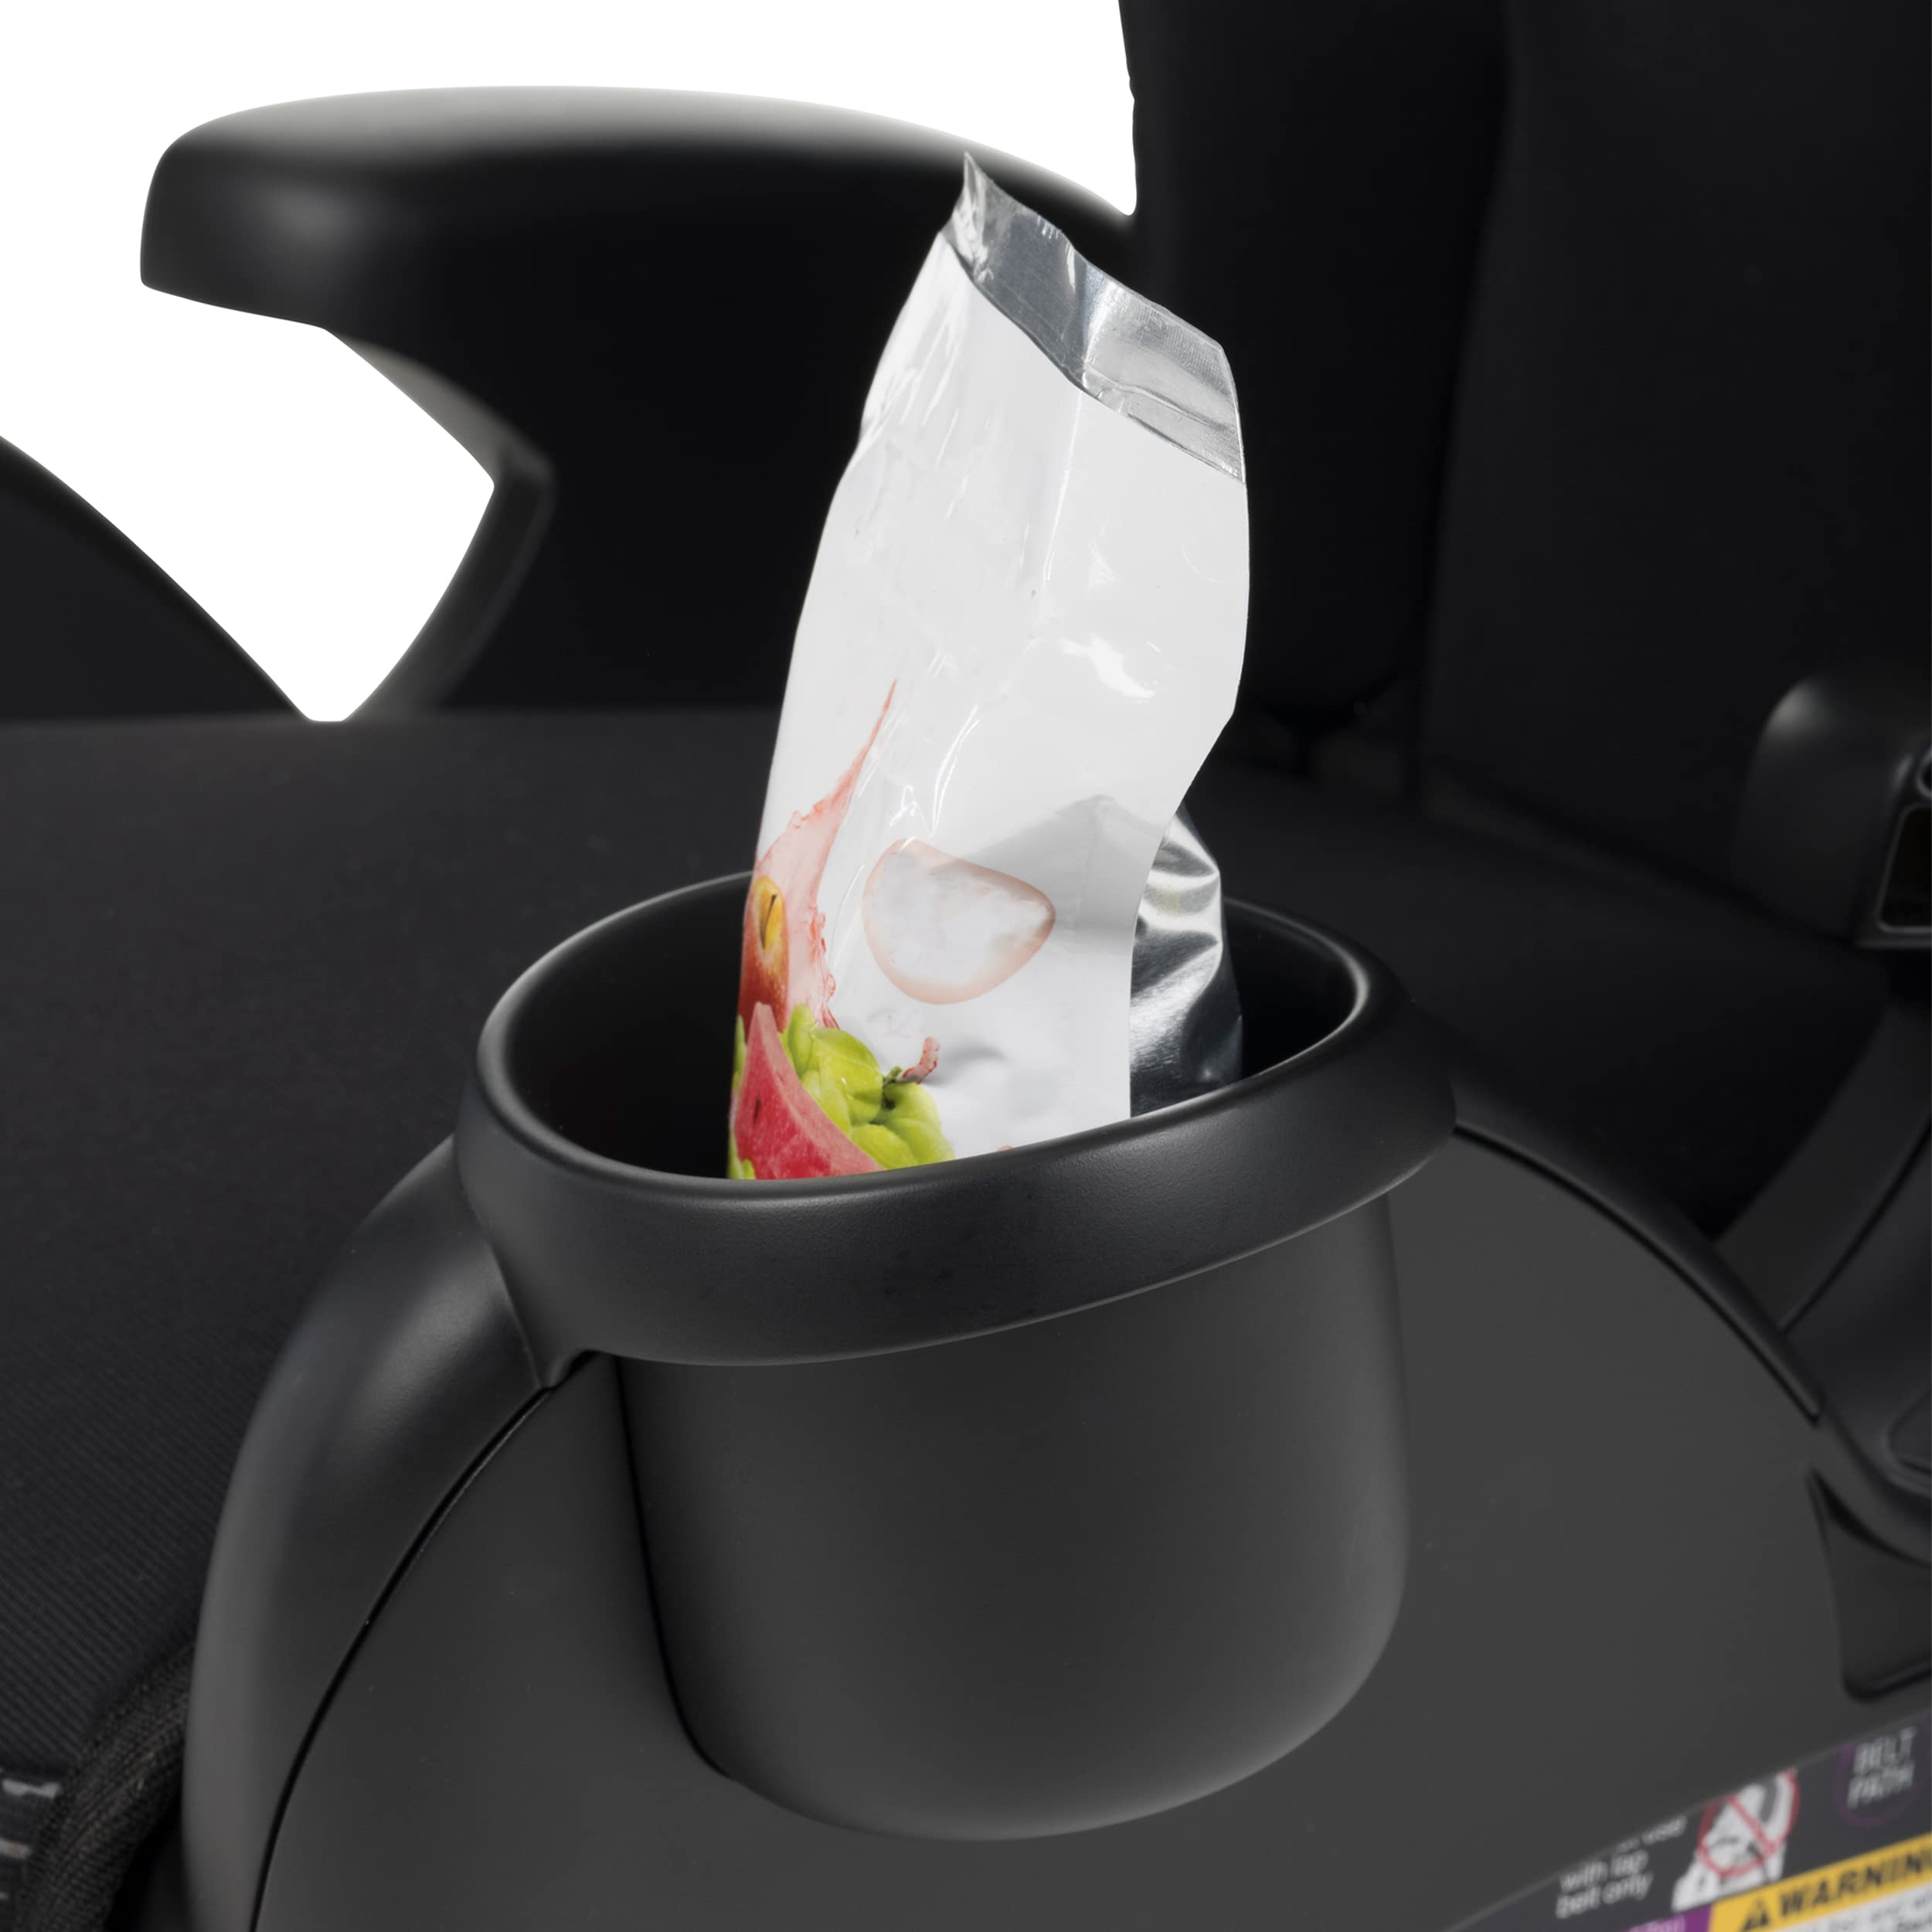 Evenflo GoTime LX Booster Car Seat (Chardon Black)